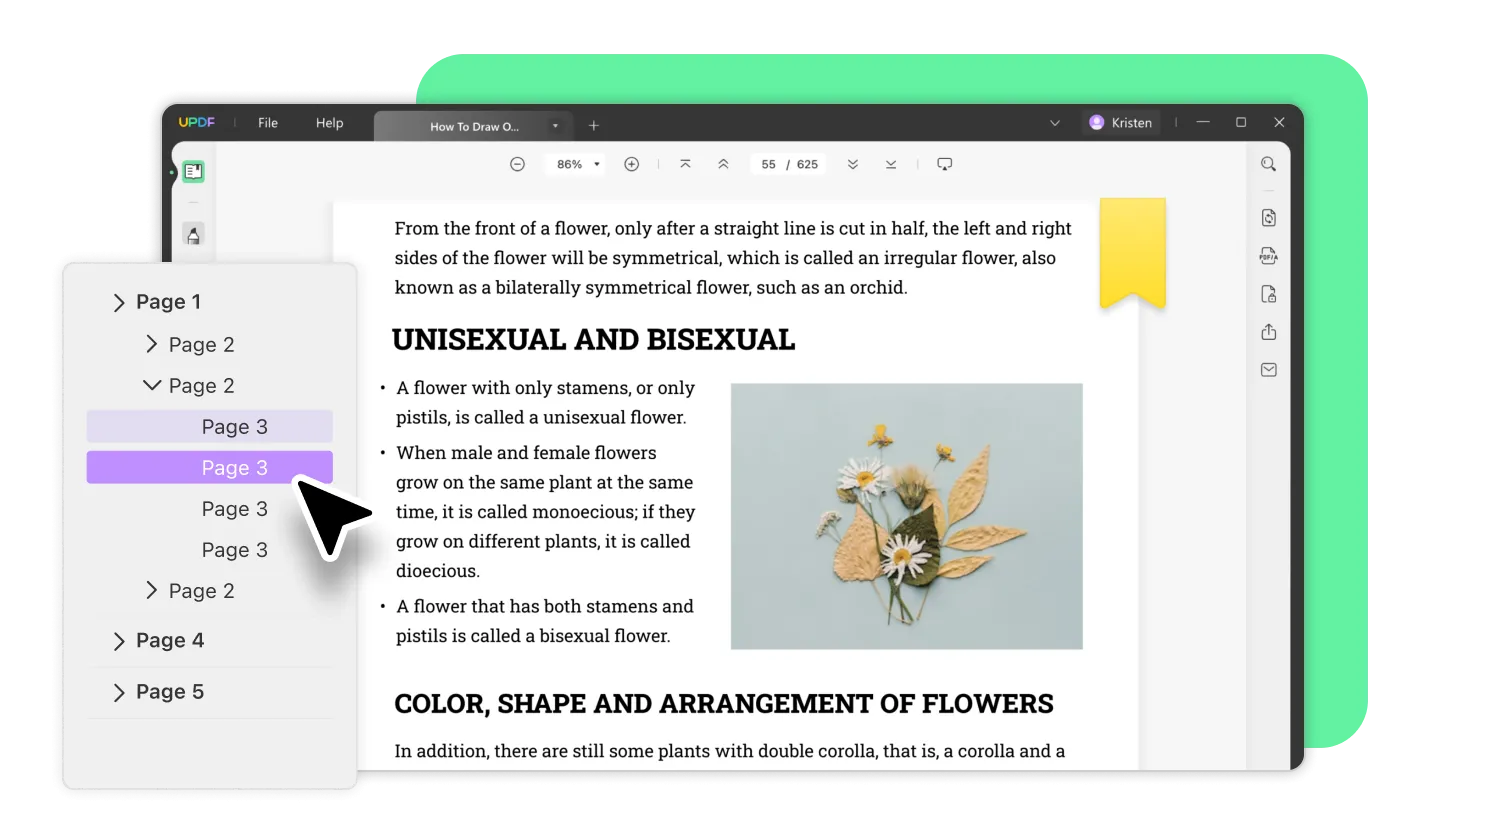 create bookmarks in pdf